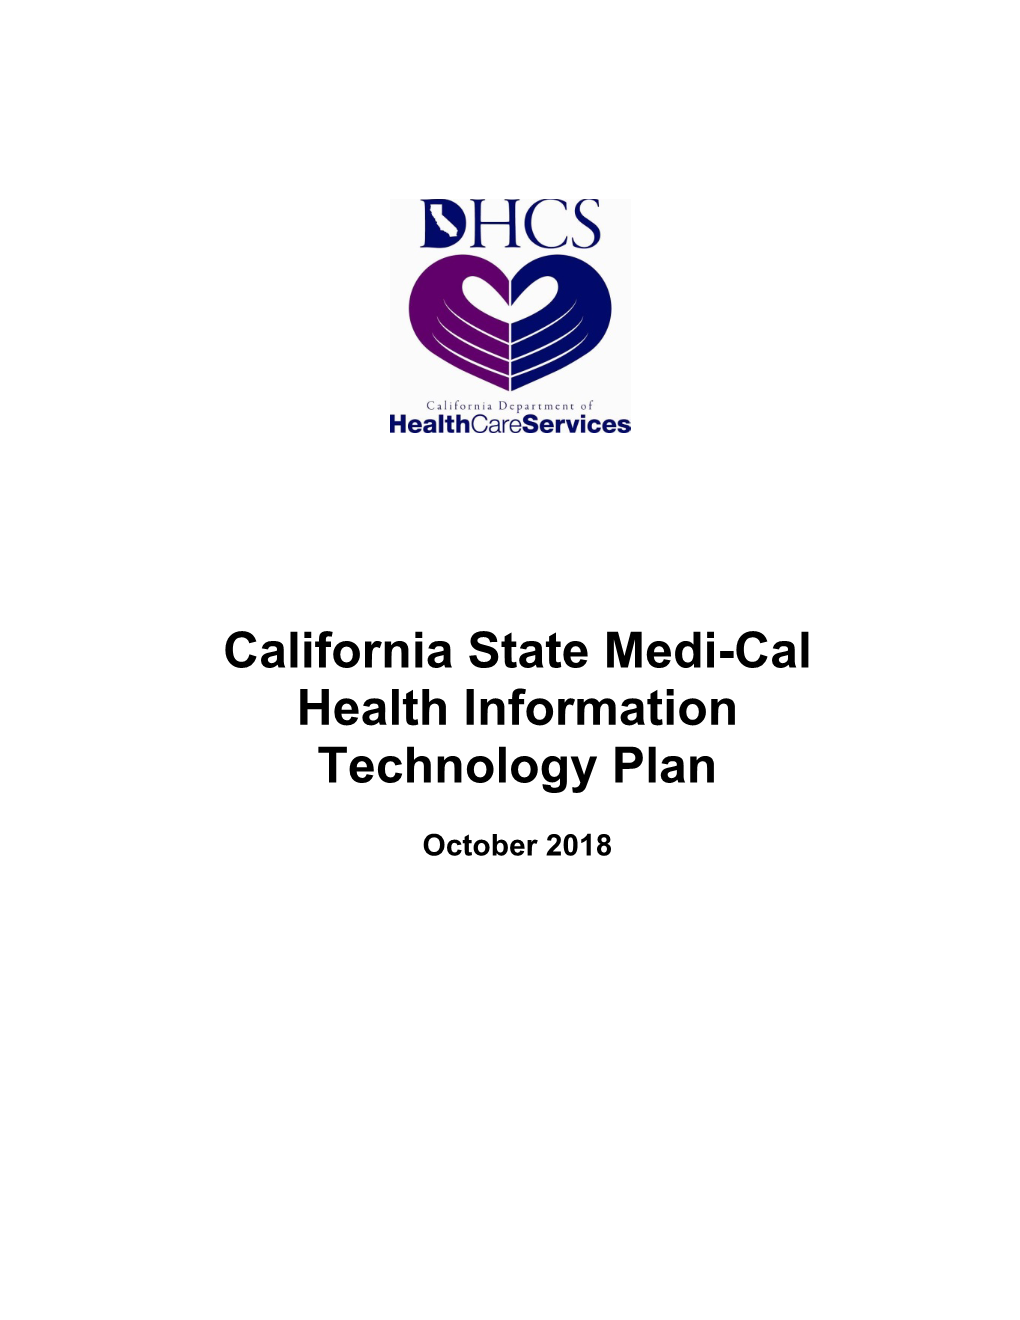 California State Medi-Cal Health Information Technology Plan (January 10, 2014)